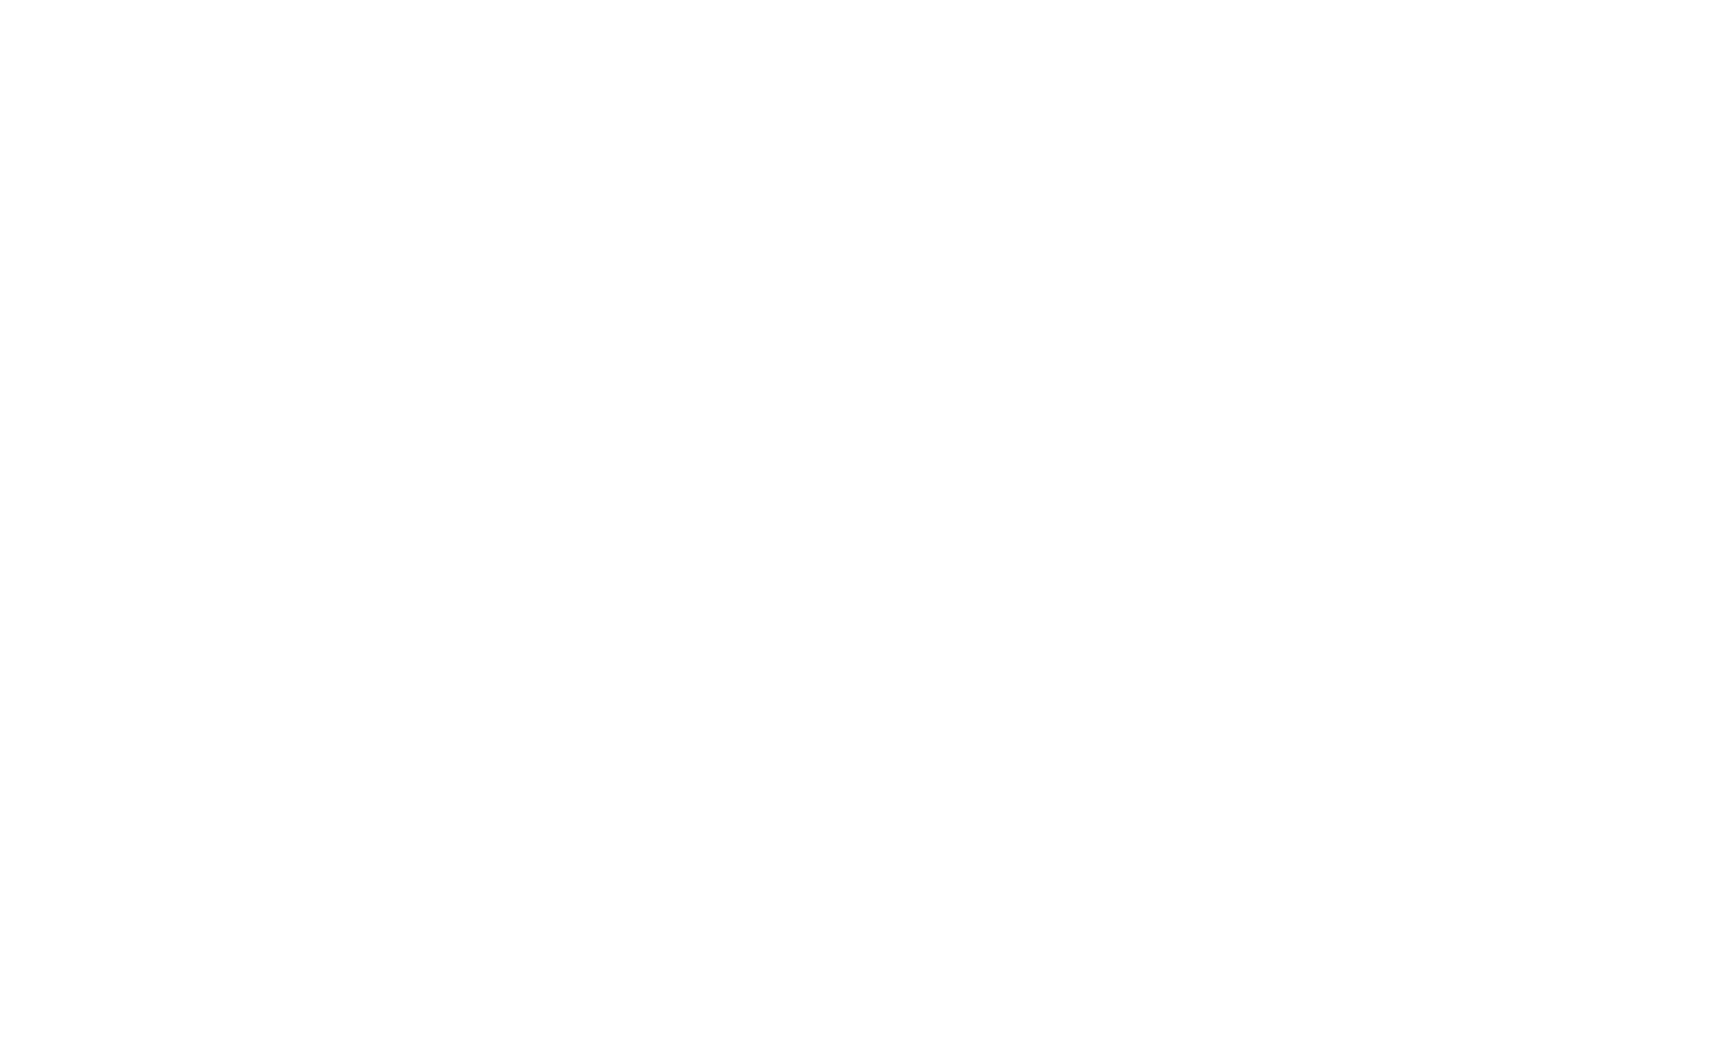 Amrit 's logo